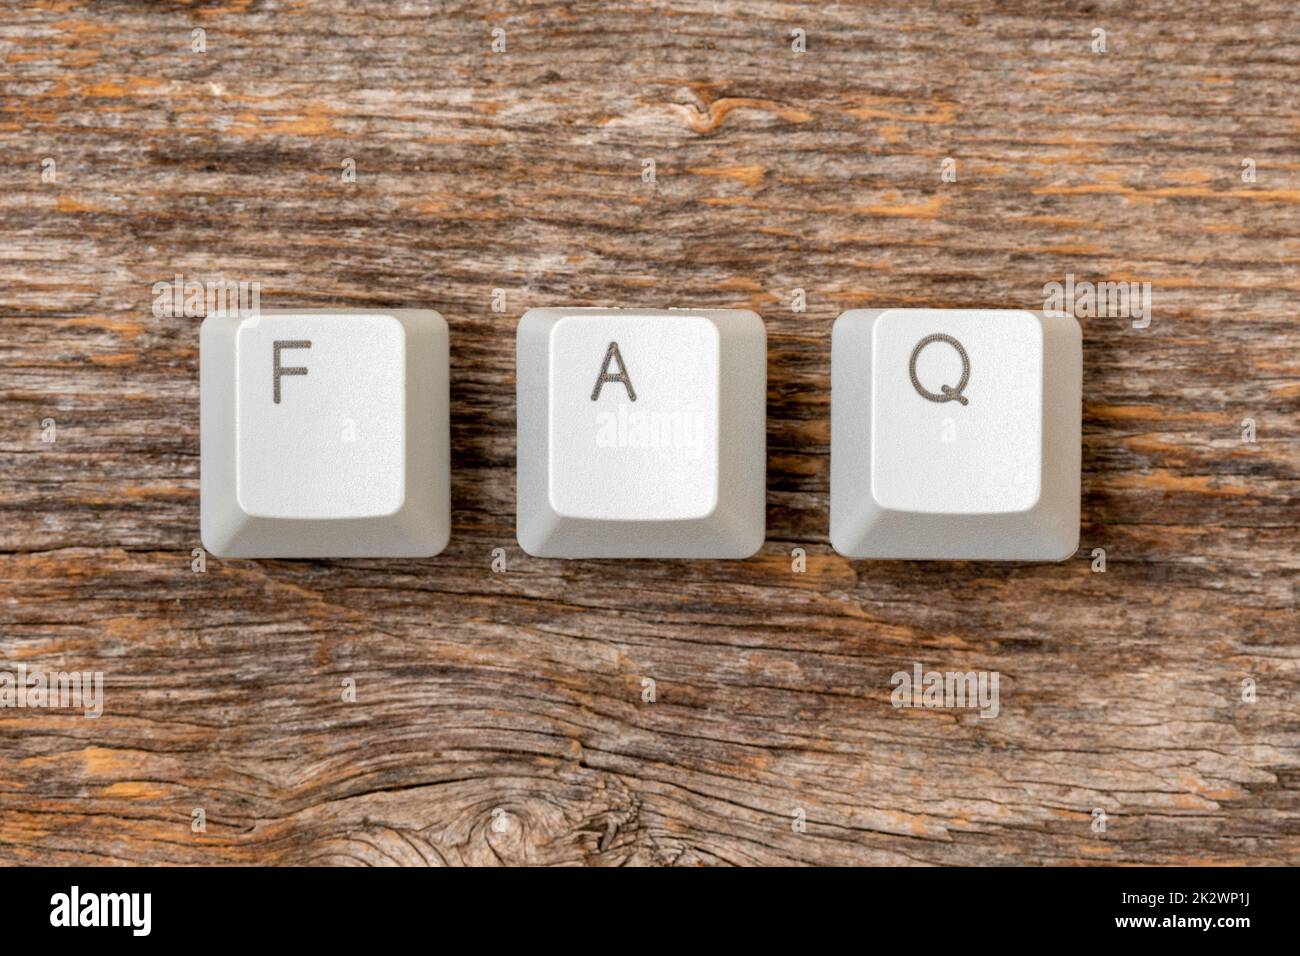 Four computer keyboard keys arranged to spell FAQ word Stock Photo